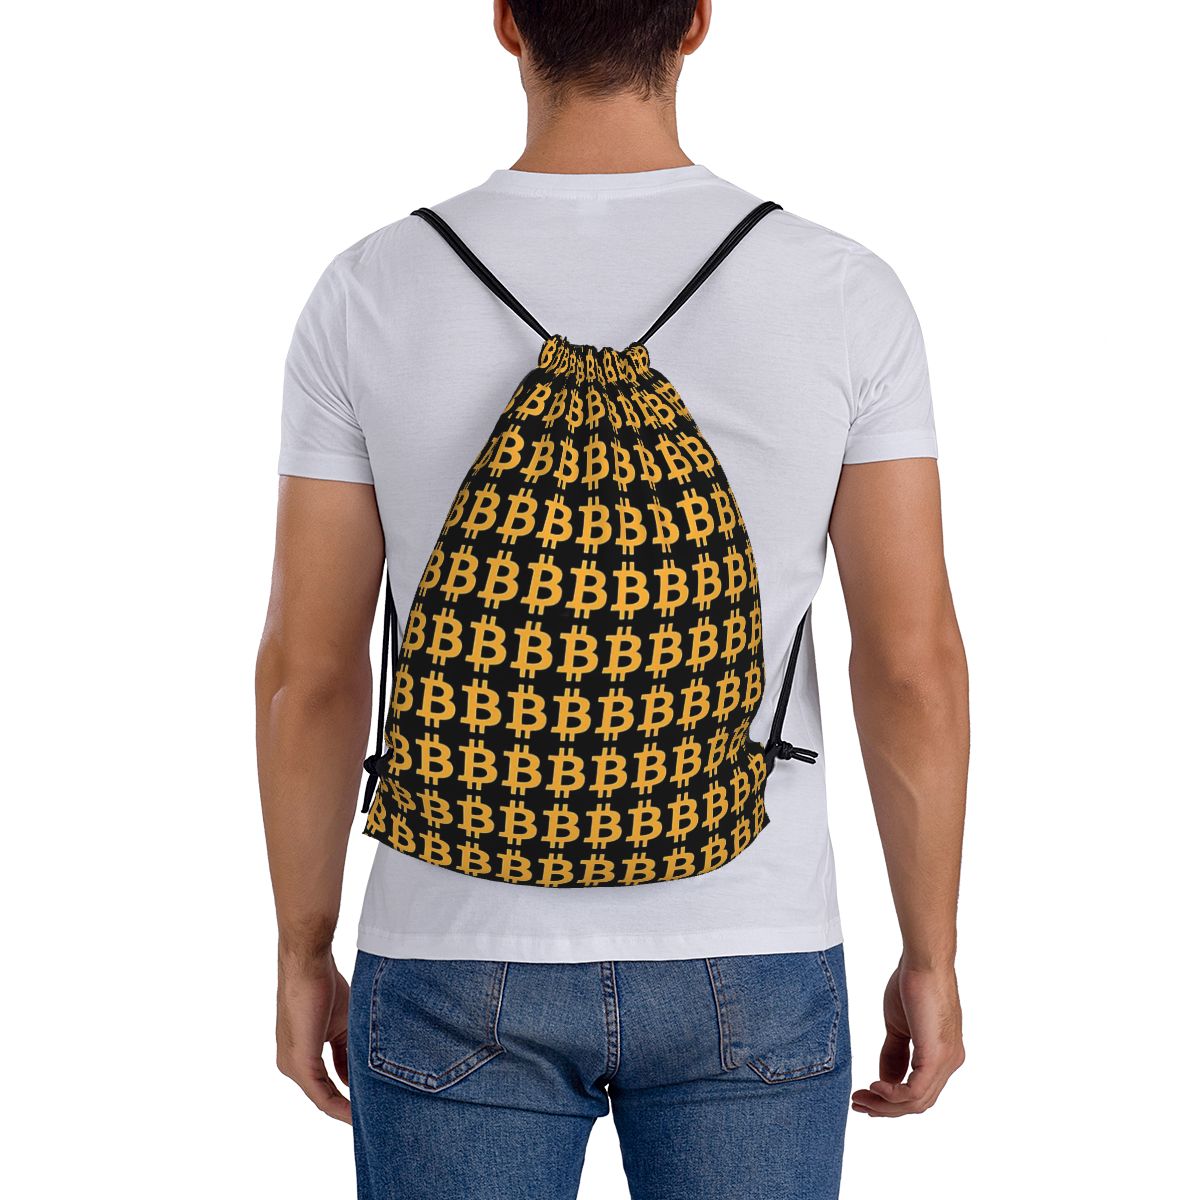 Bitcoin bag